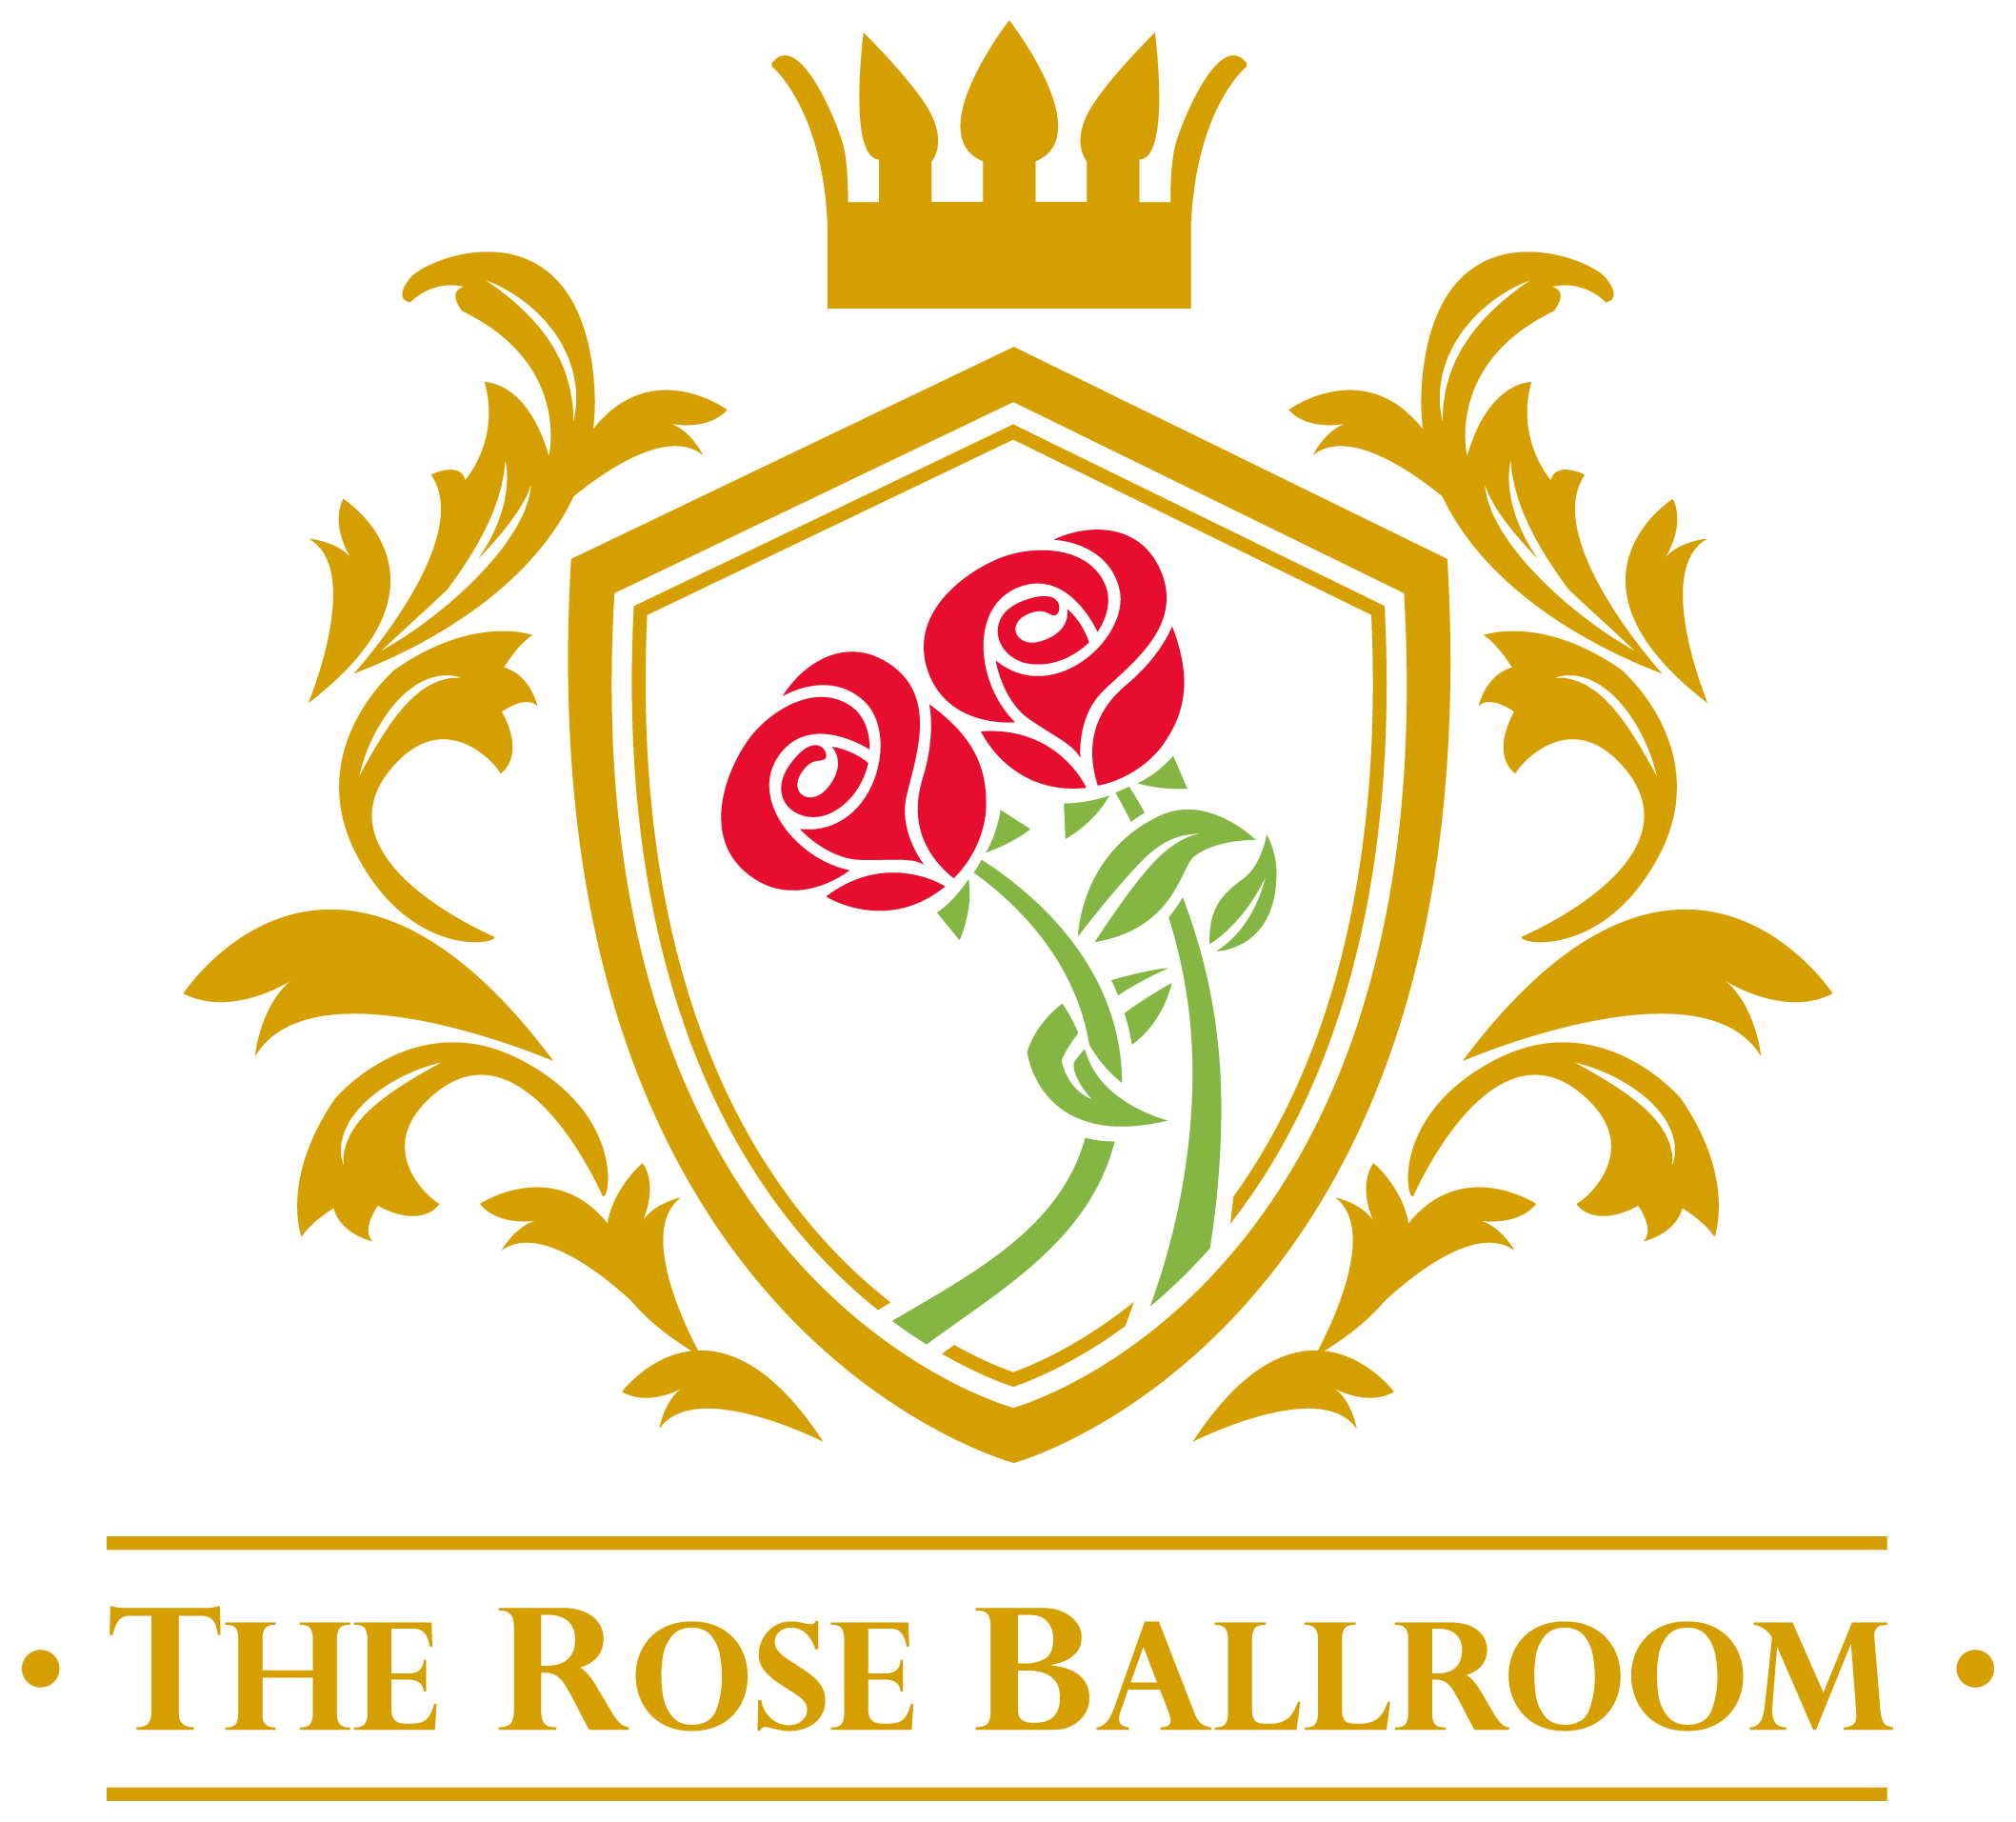 The Rose Ballroom